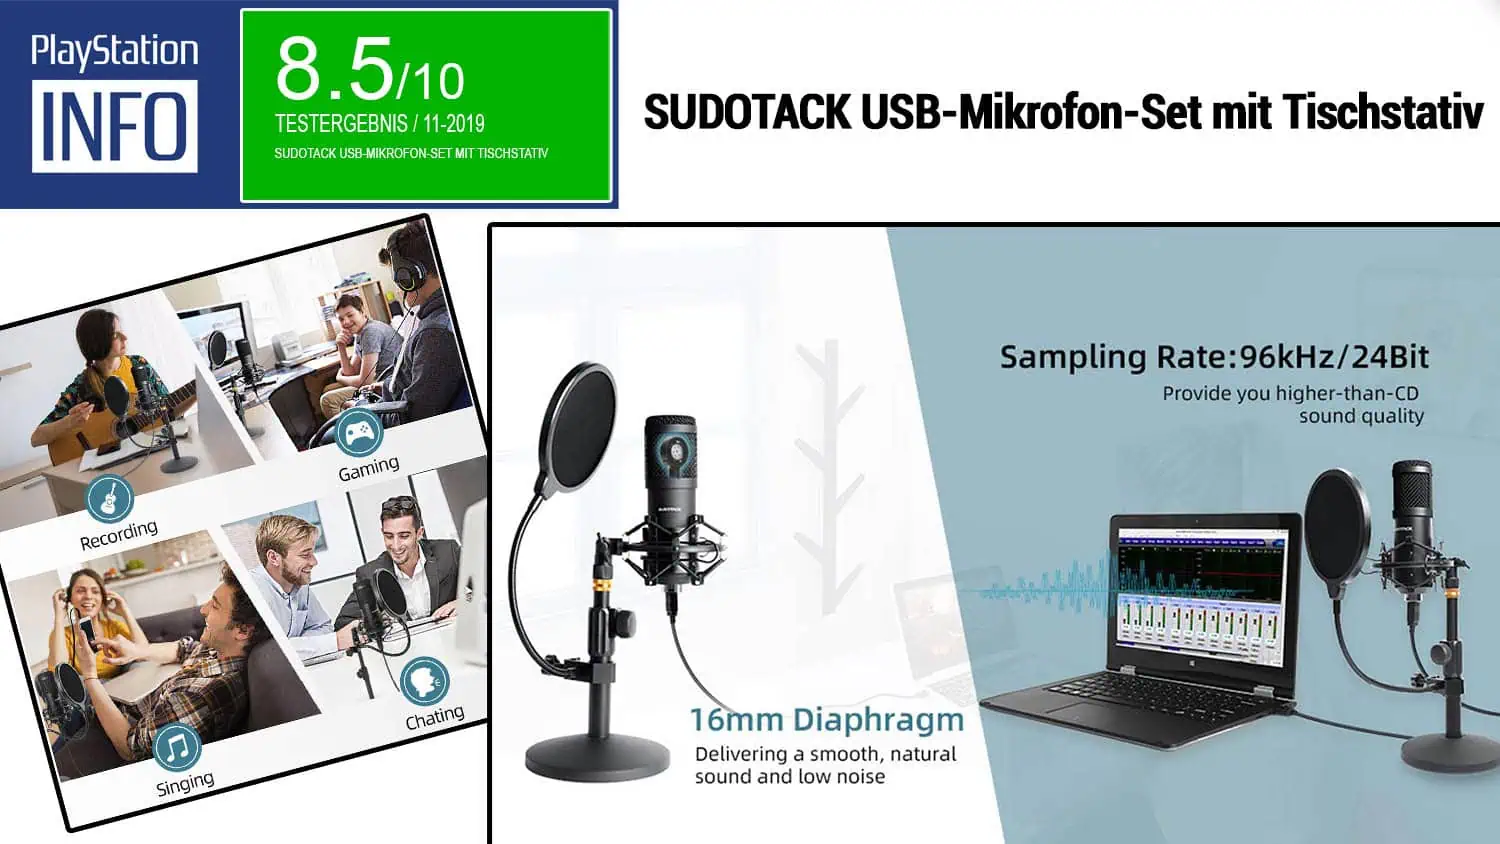 SUDOTACK USB-Mikrofon-Set mit Tischstativ - Das Komplettset angetestet